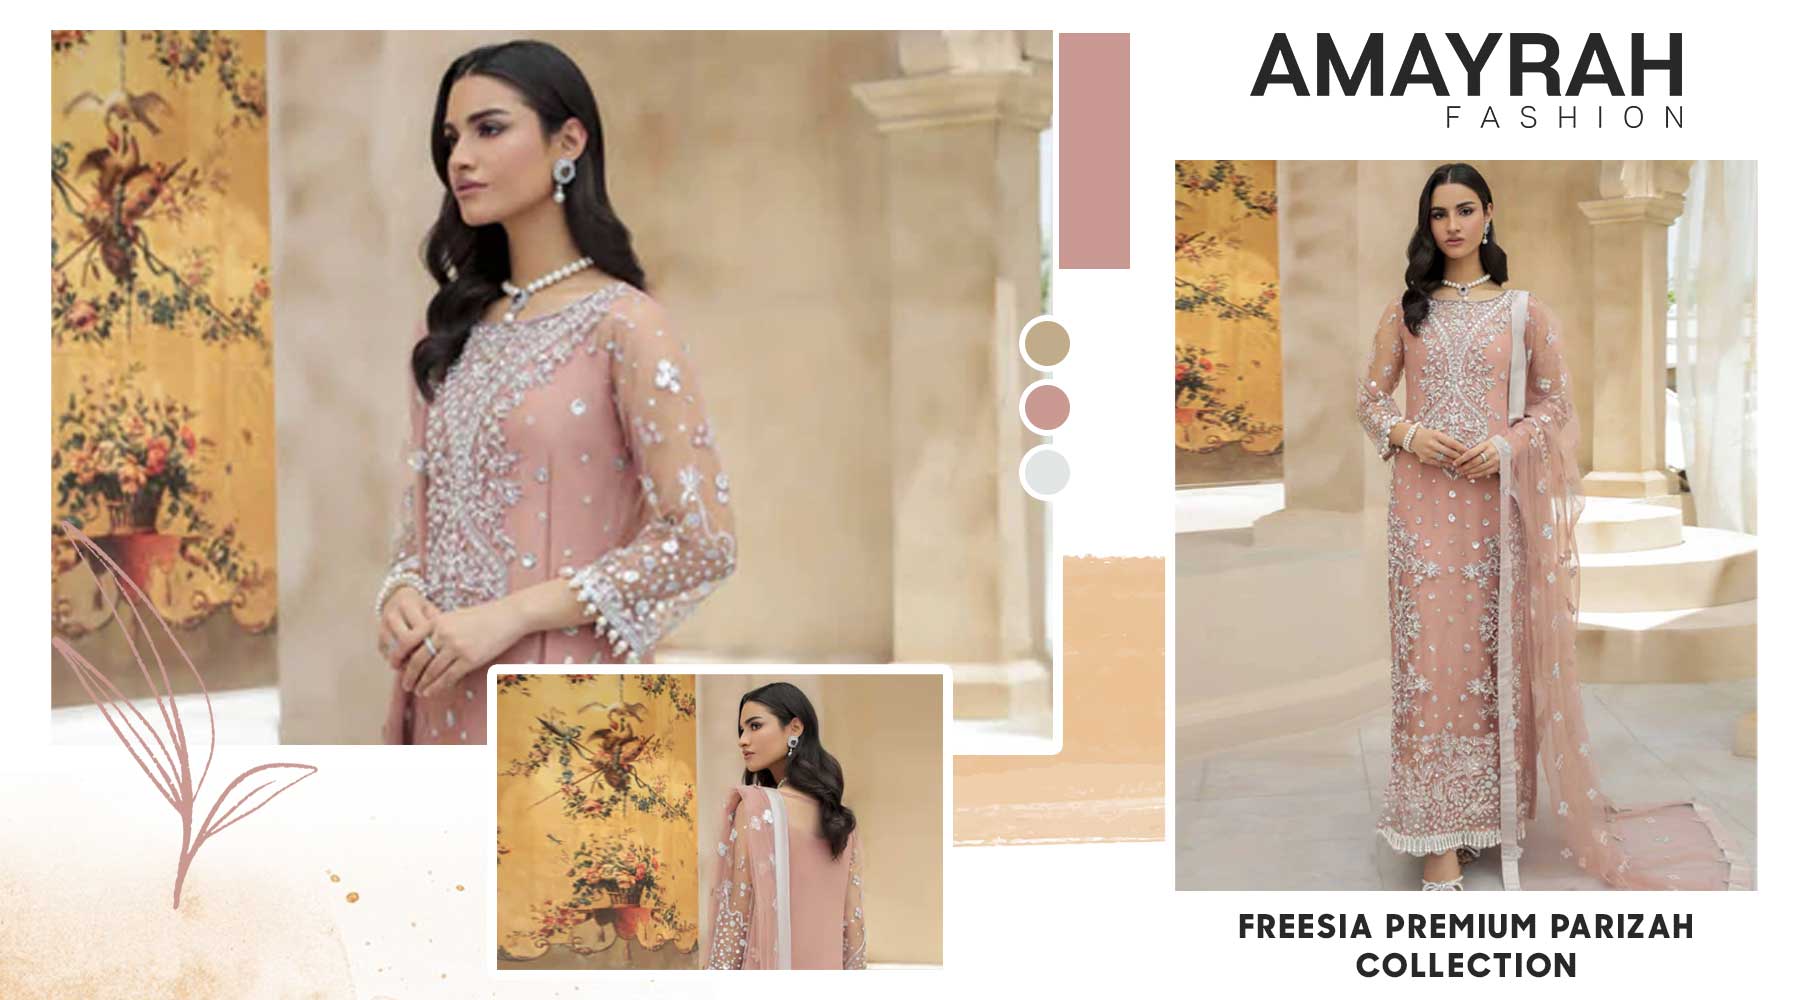 Amayrah Fashion: Unveiling the Freesia Premium Parizah Collection